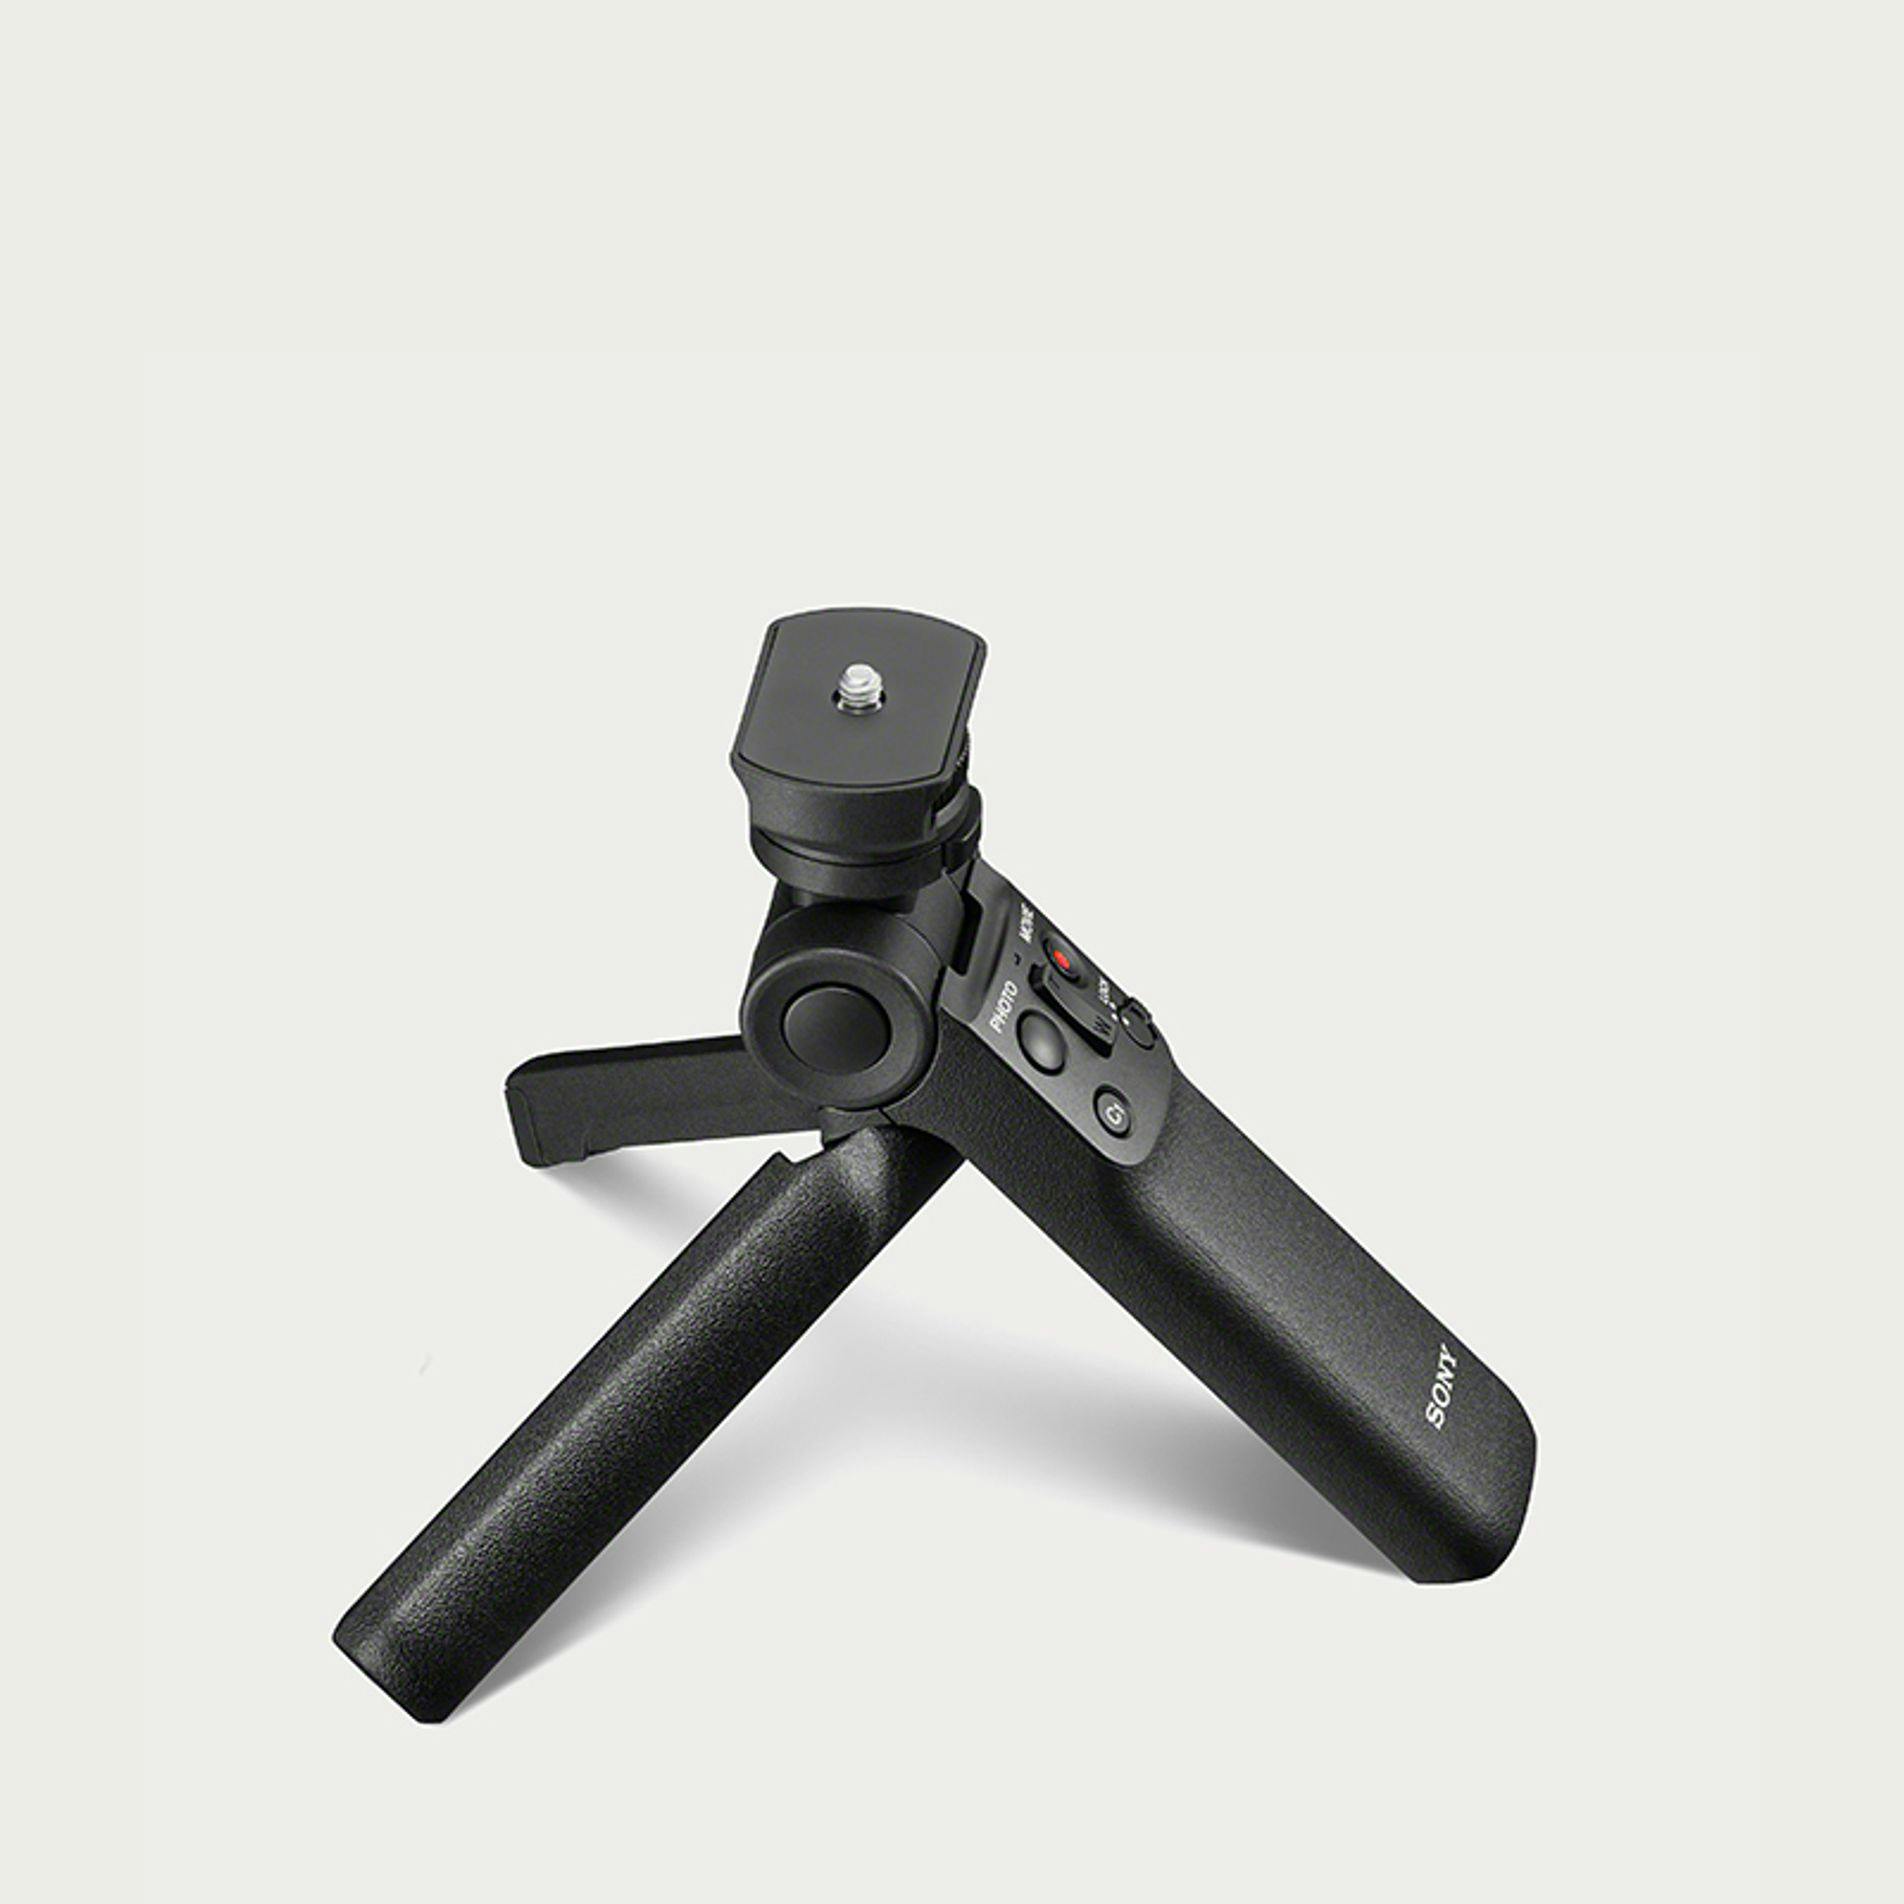 Wireless Bluetooth Shooting Grip and Tripod GPVPT2BT - Black